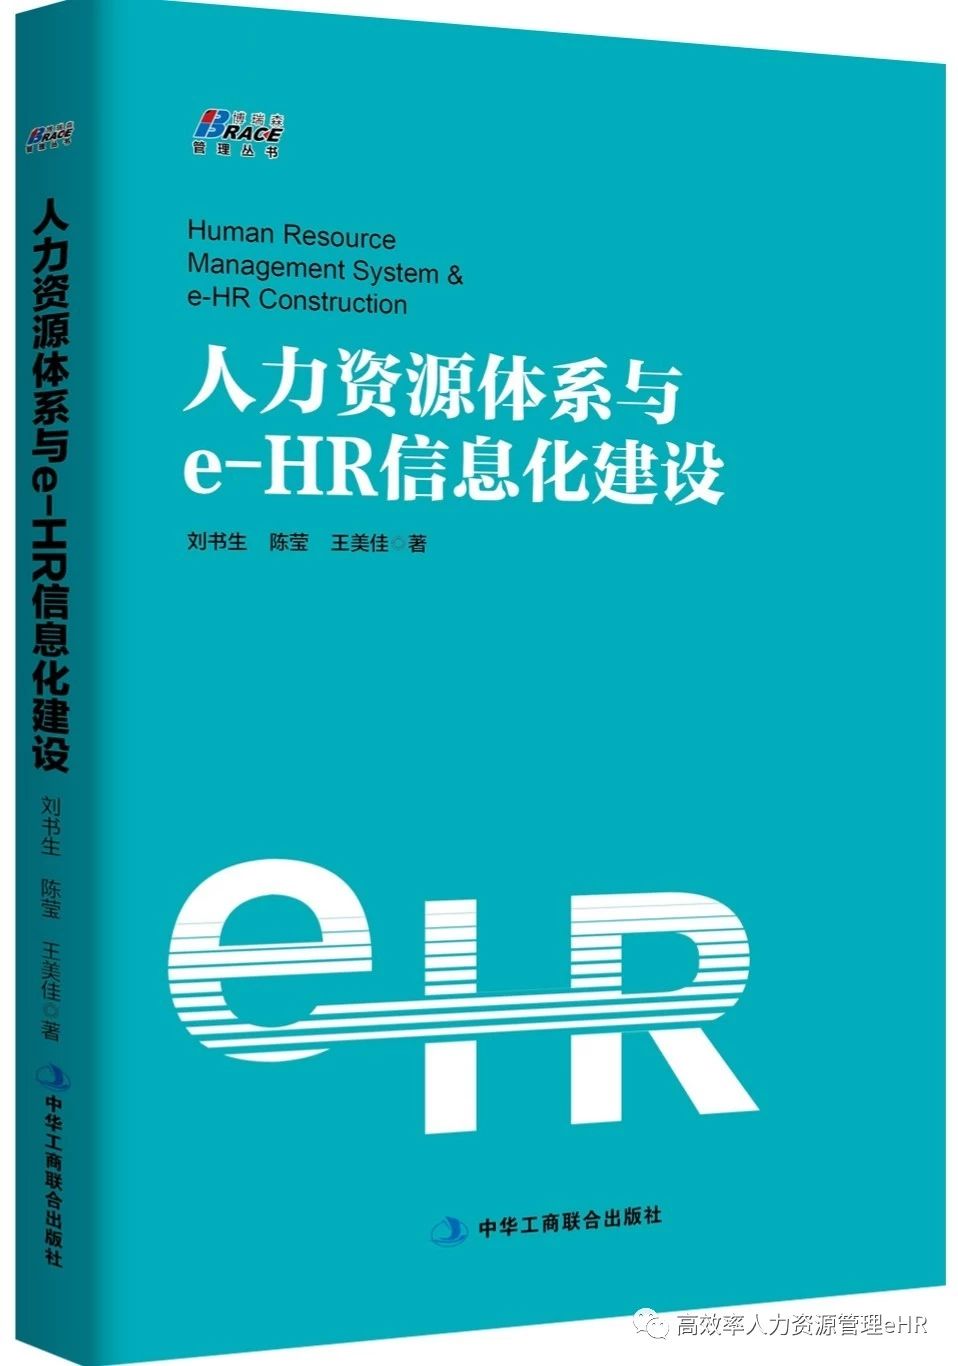 eHR人力资源六大模块软件全套+全套信息化数据管理软件/